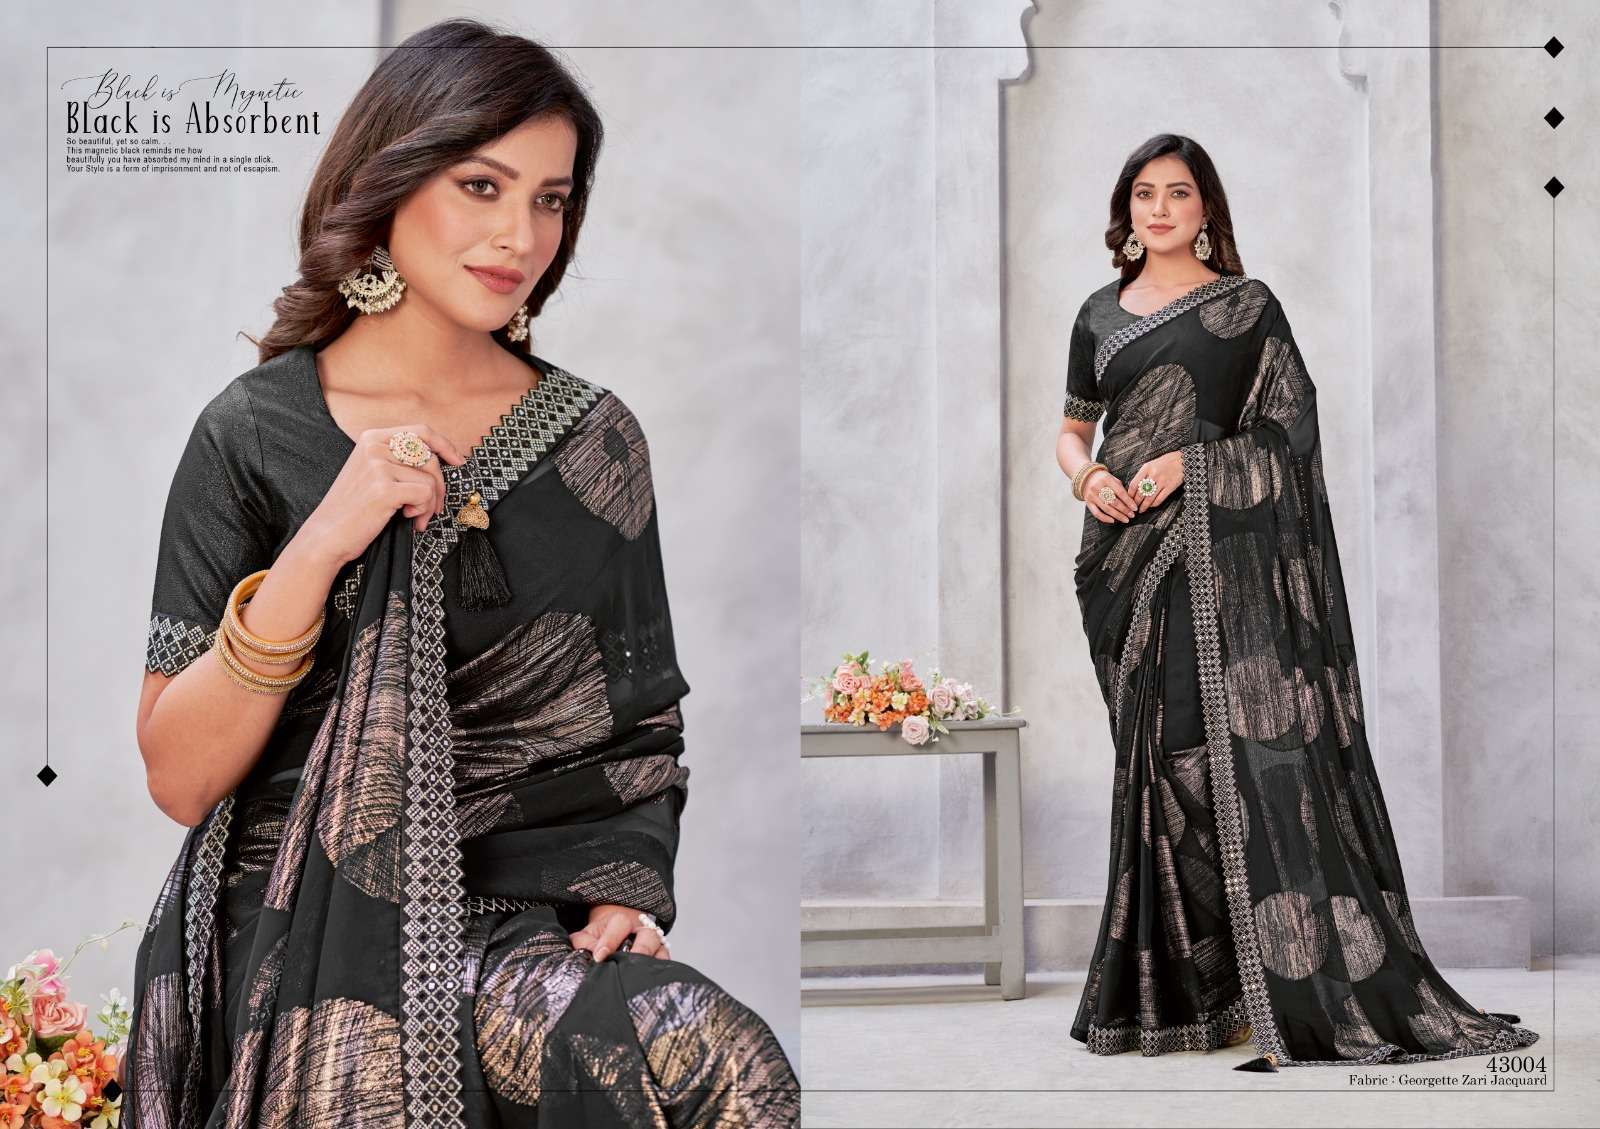 Mahotsav norita 43000 zaina designet fancy saree 